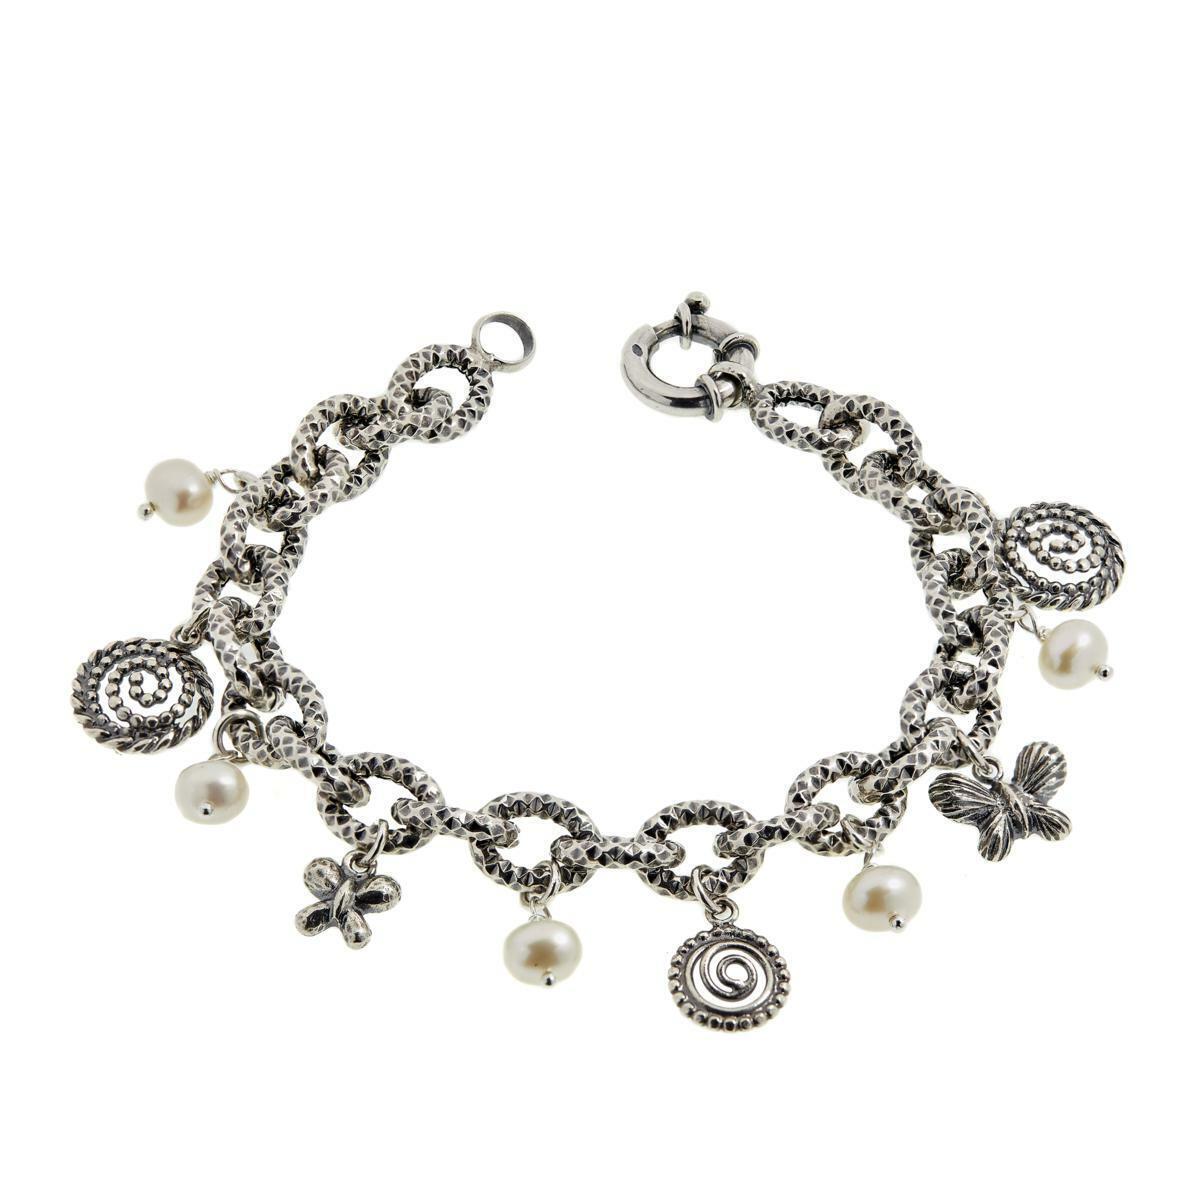 LiPaz Sterling Silver Cultured Pearl Butterfly Charm Bracelet, 8" Wrist fit